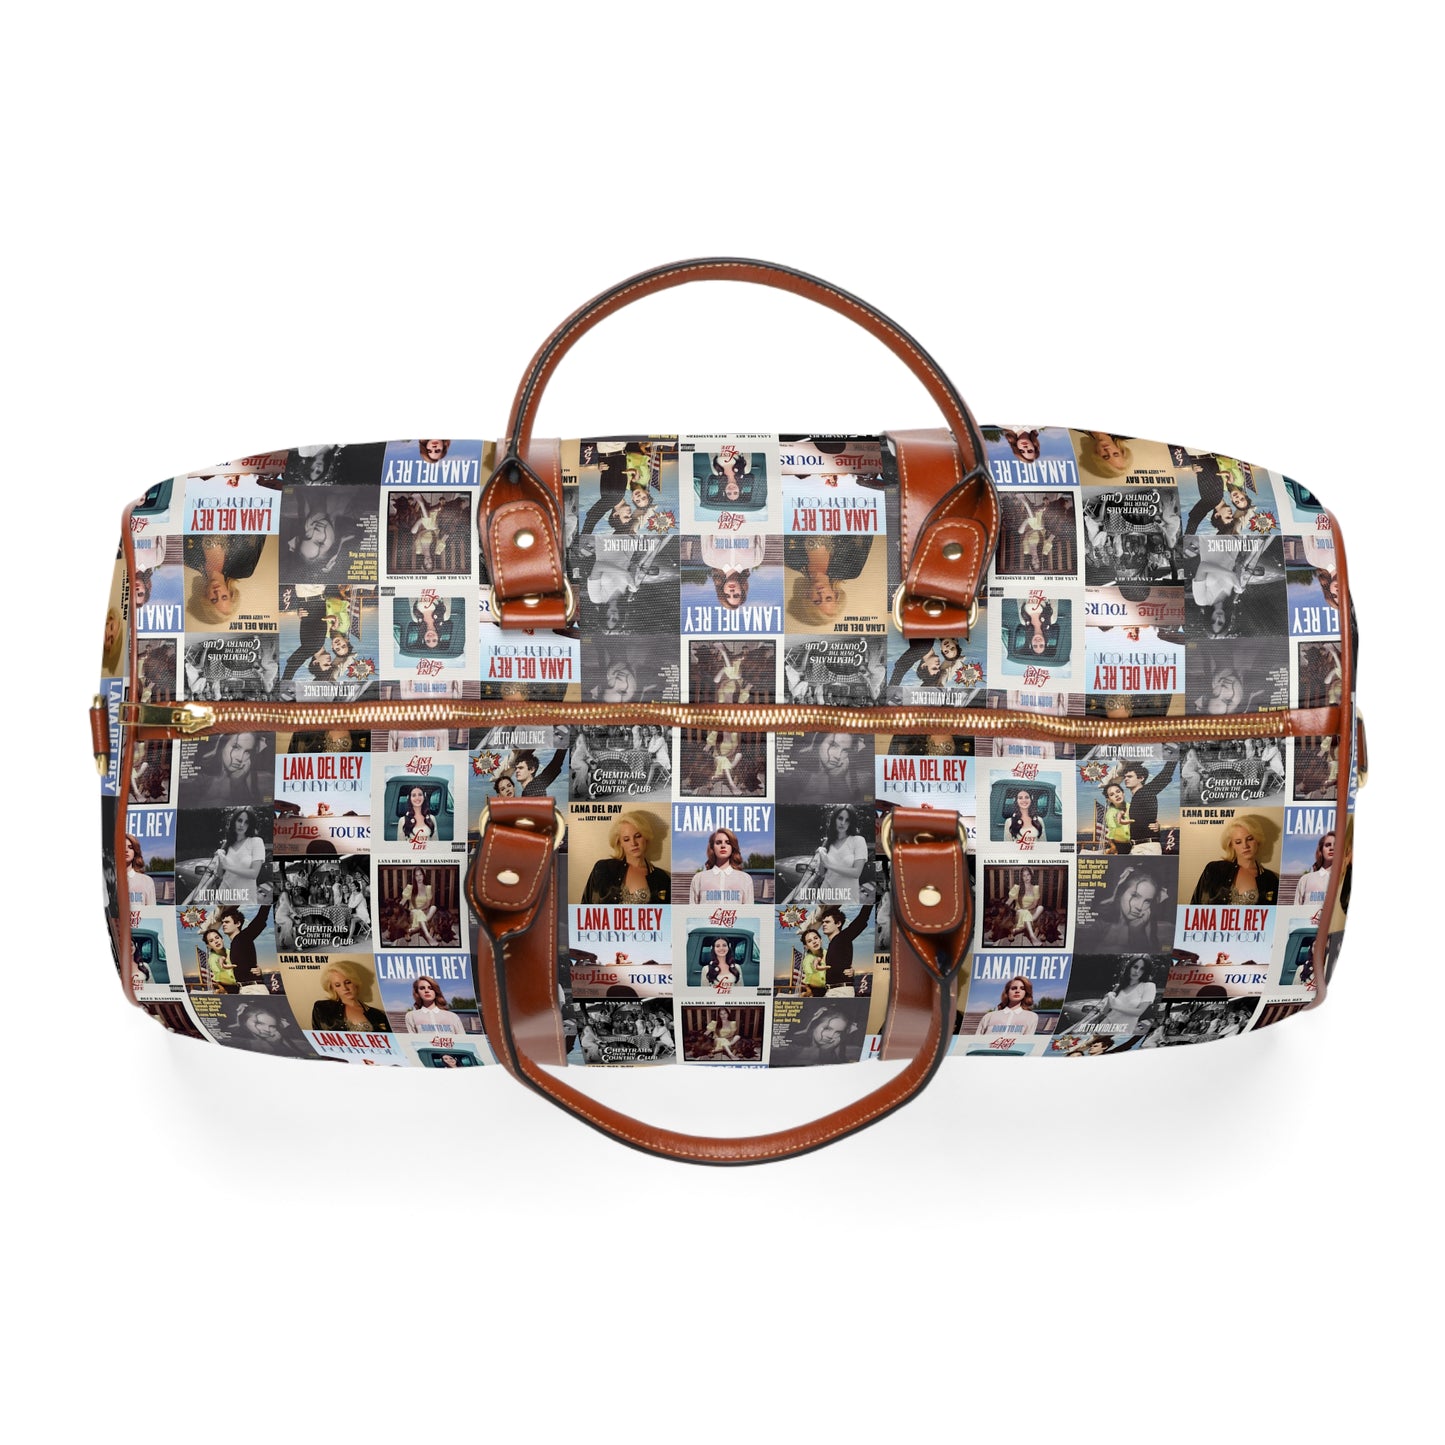 Lana Del Rey Album Cover Collage Waterproof Travel Bag